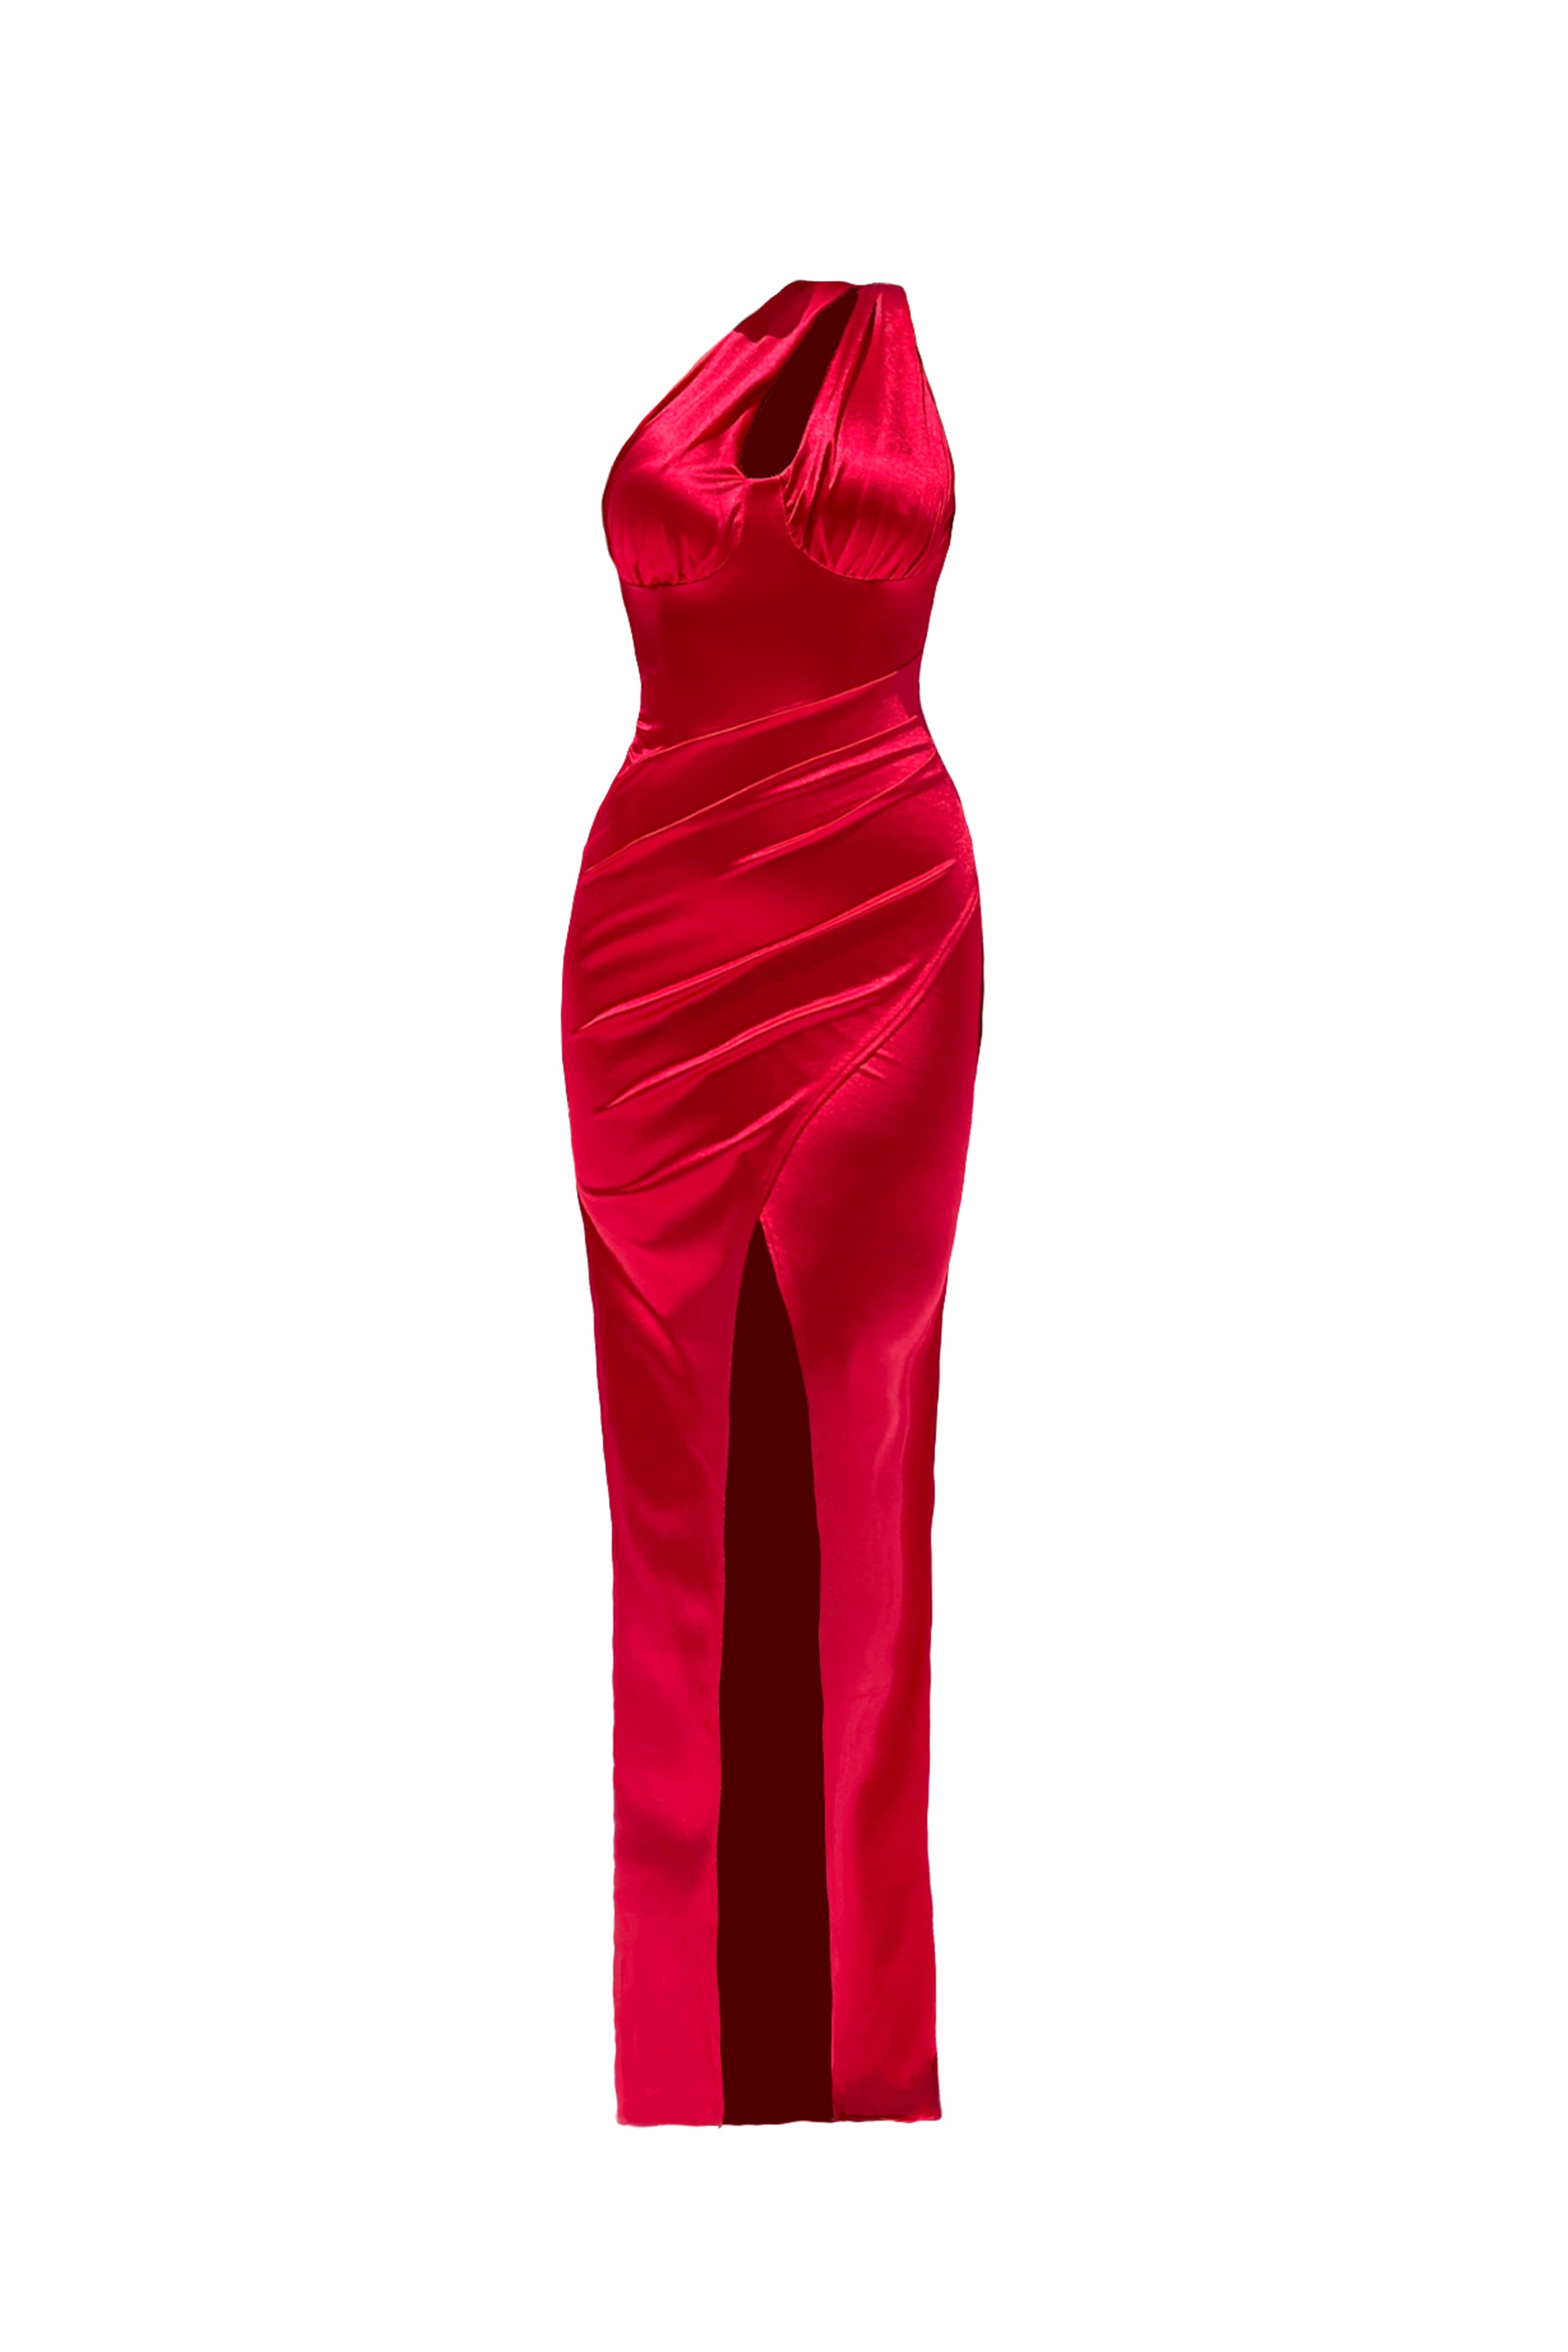 Ryn Red Dress